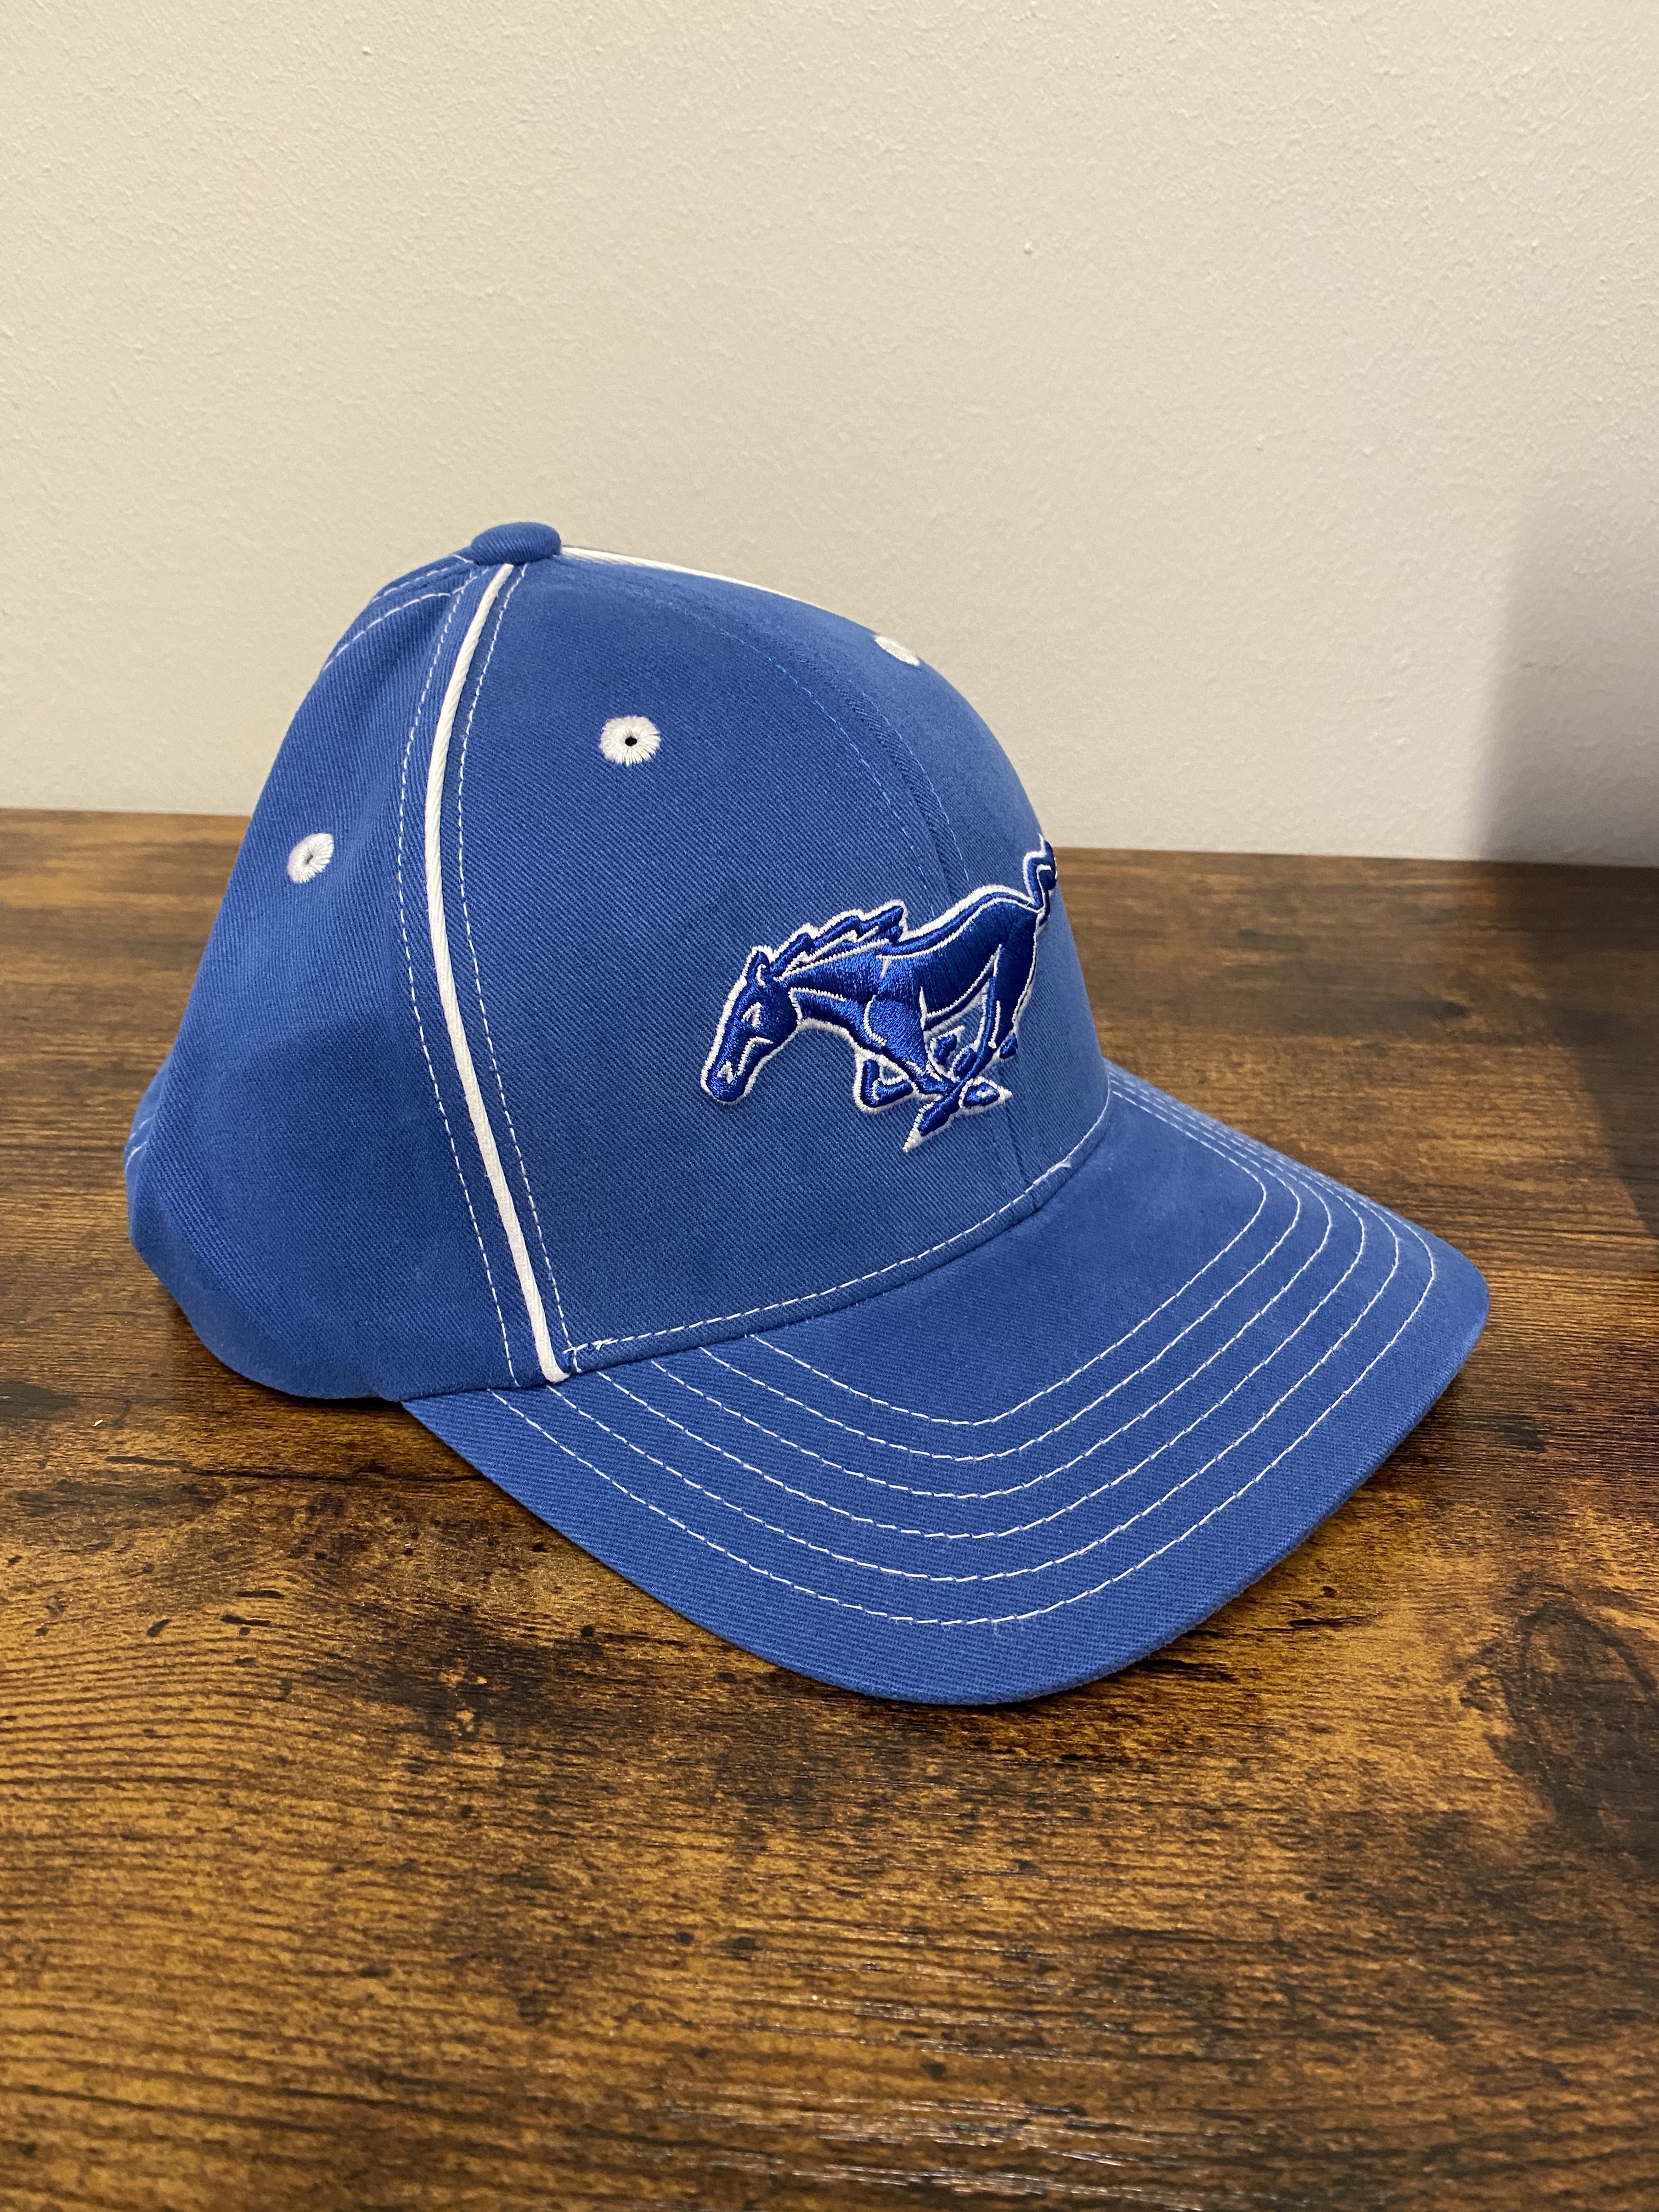 Baseball blau mit Running blauem Horse Ford Mustang Cap